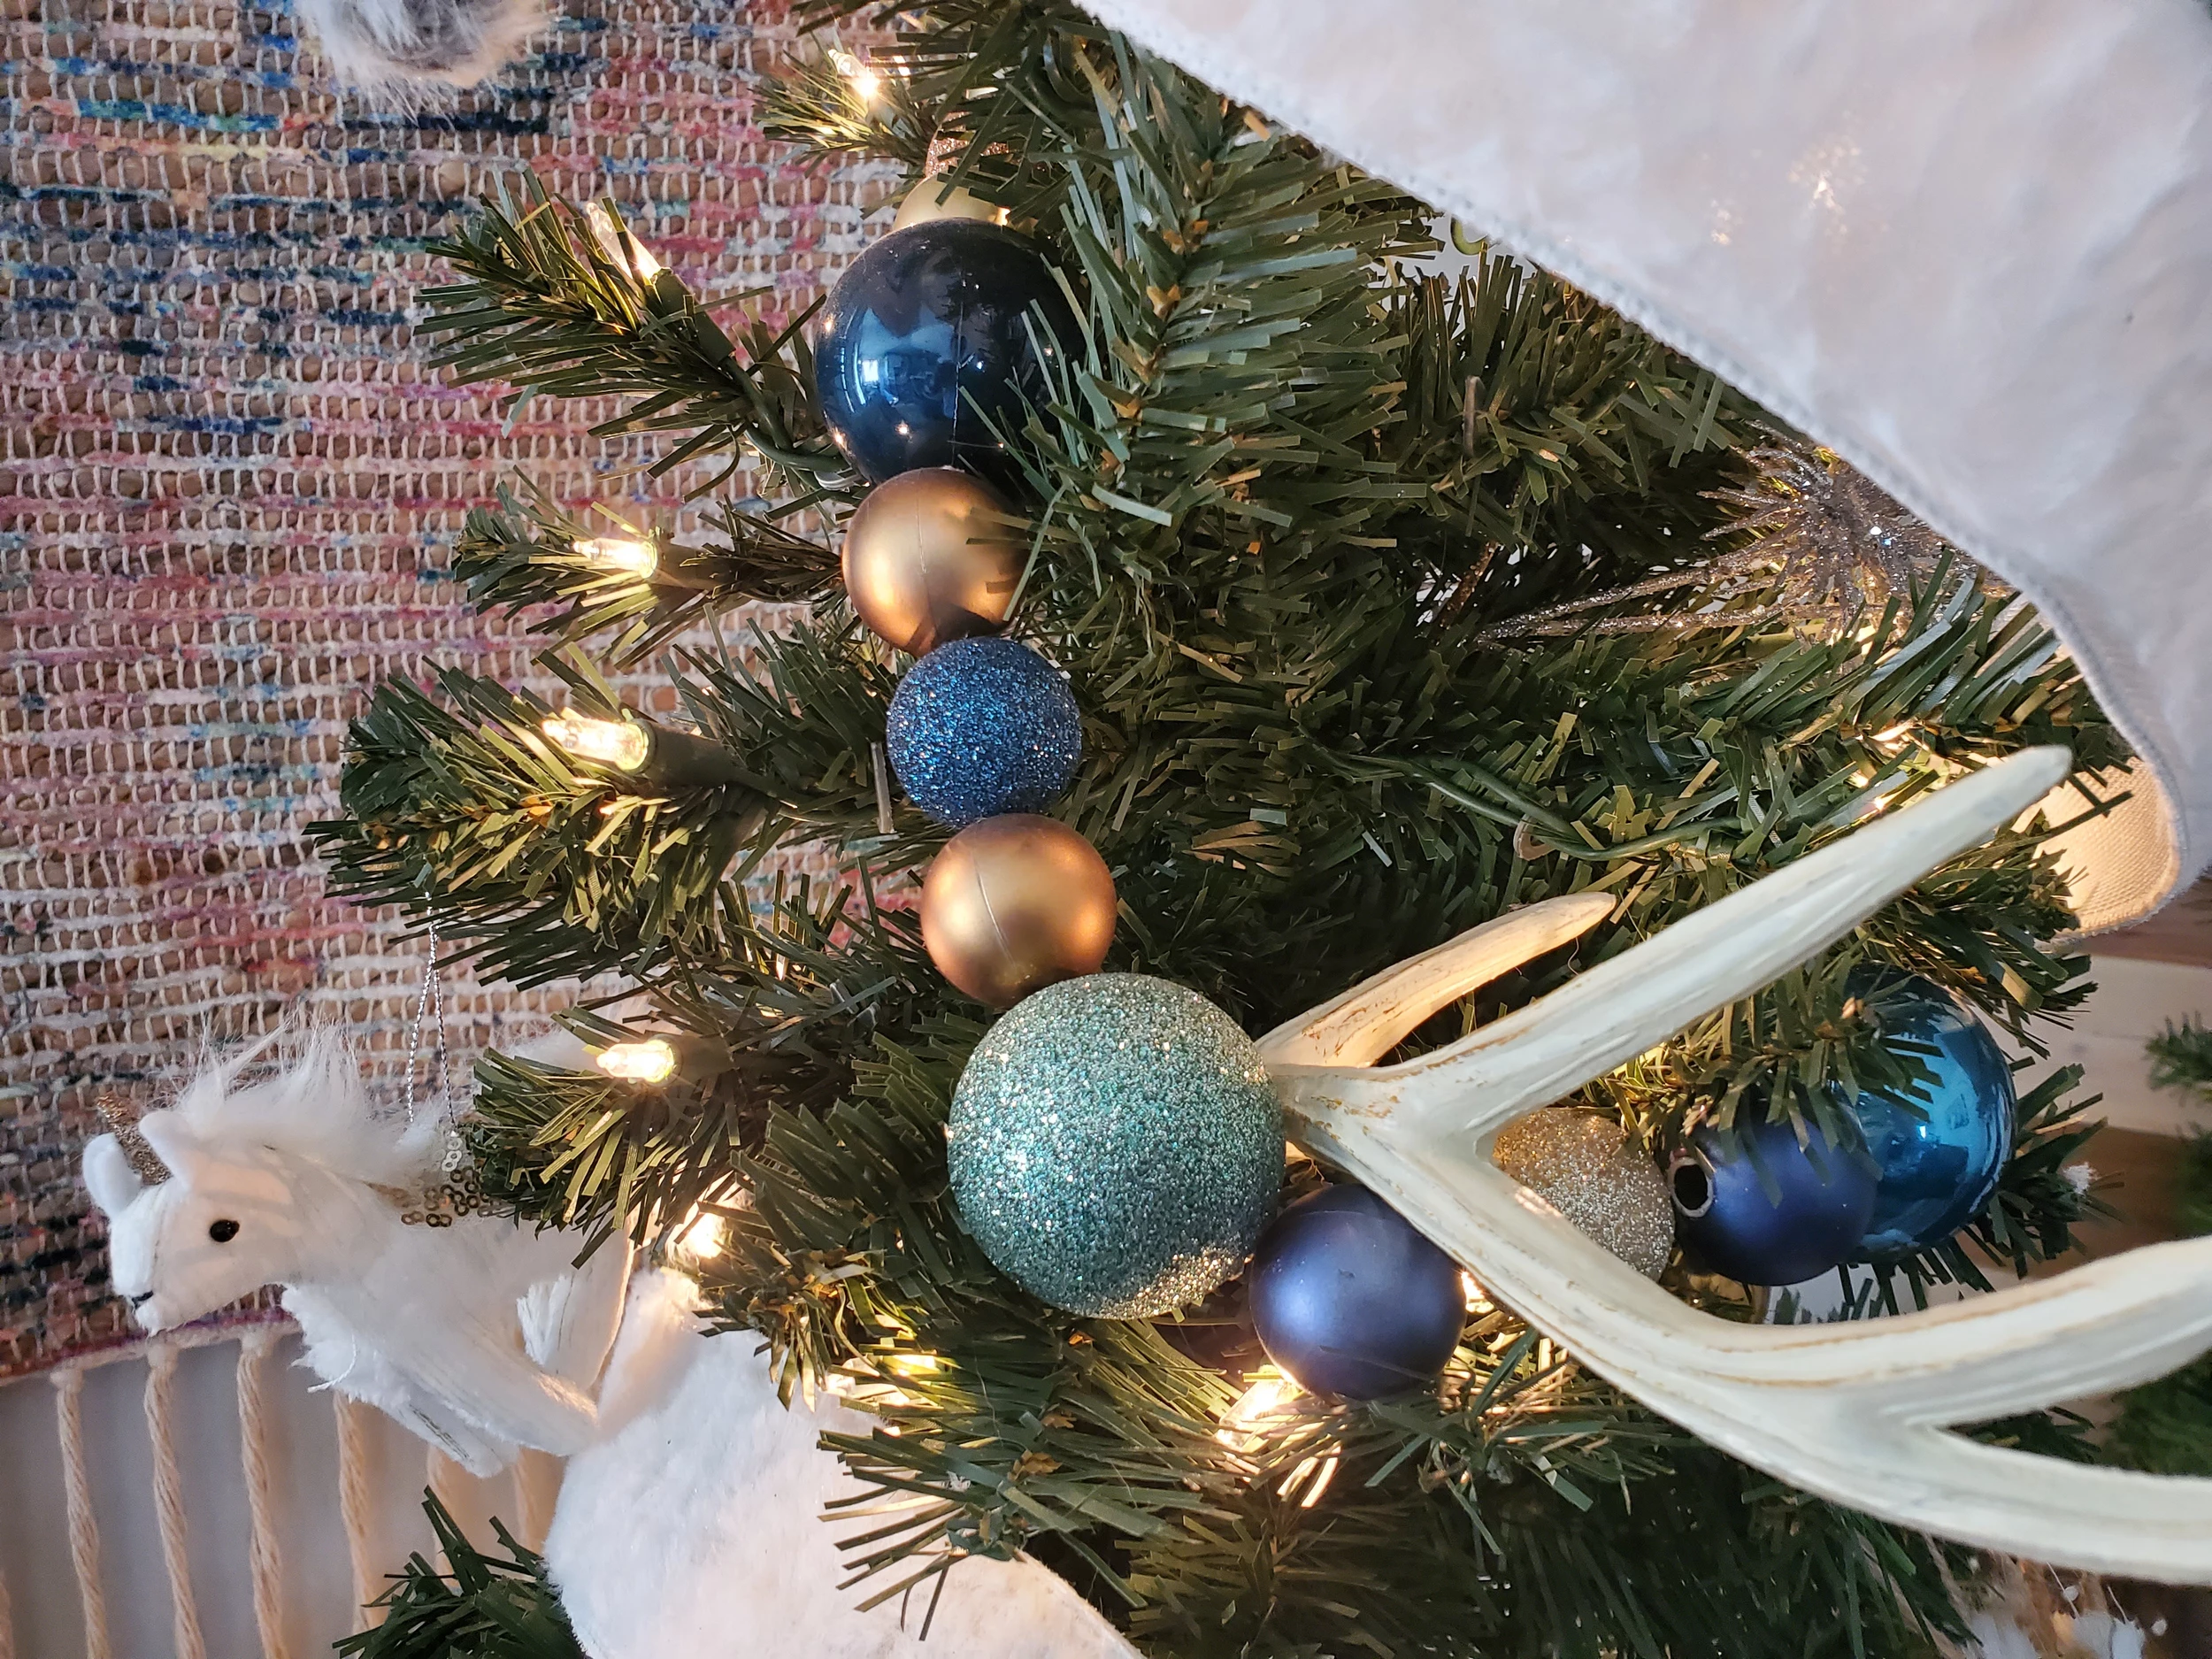 Go Go cory Carson christmas ornaments tree decorations fast free ship 